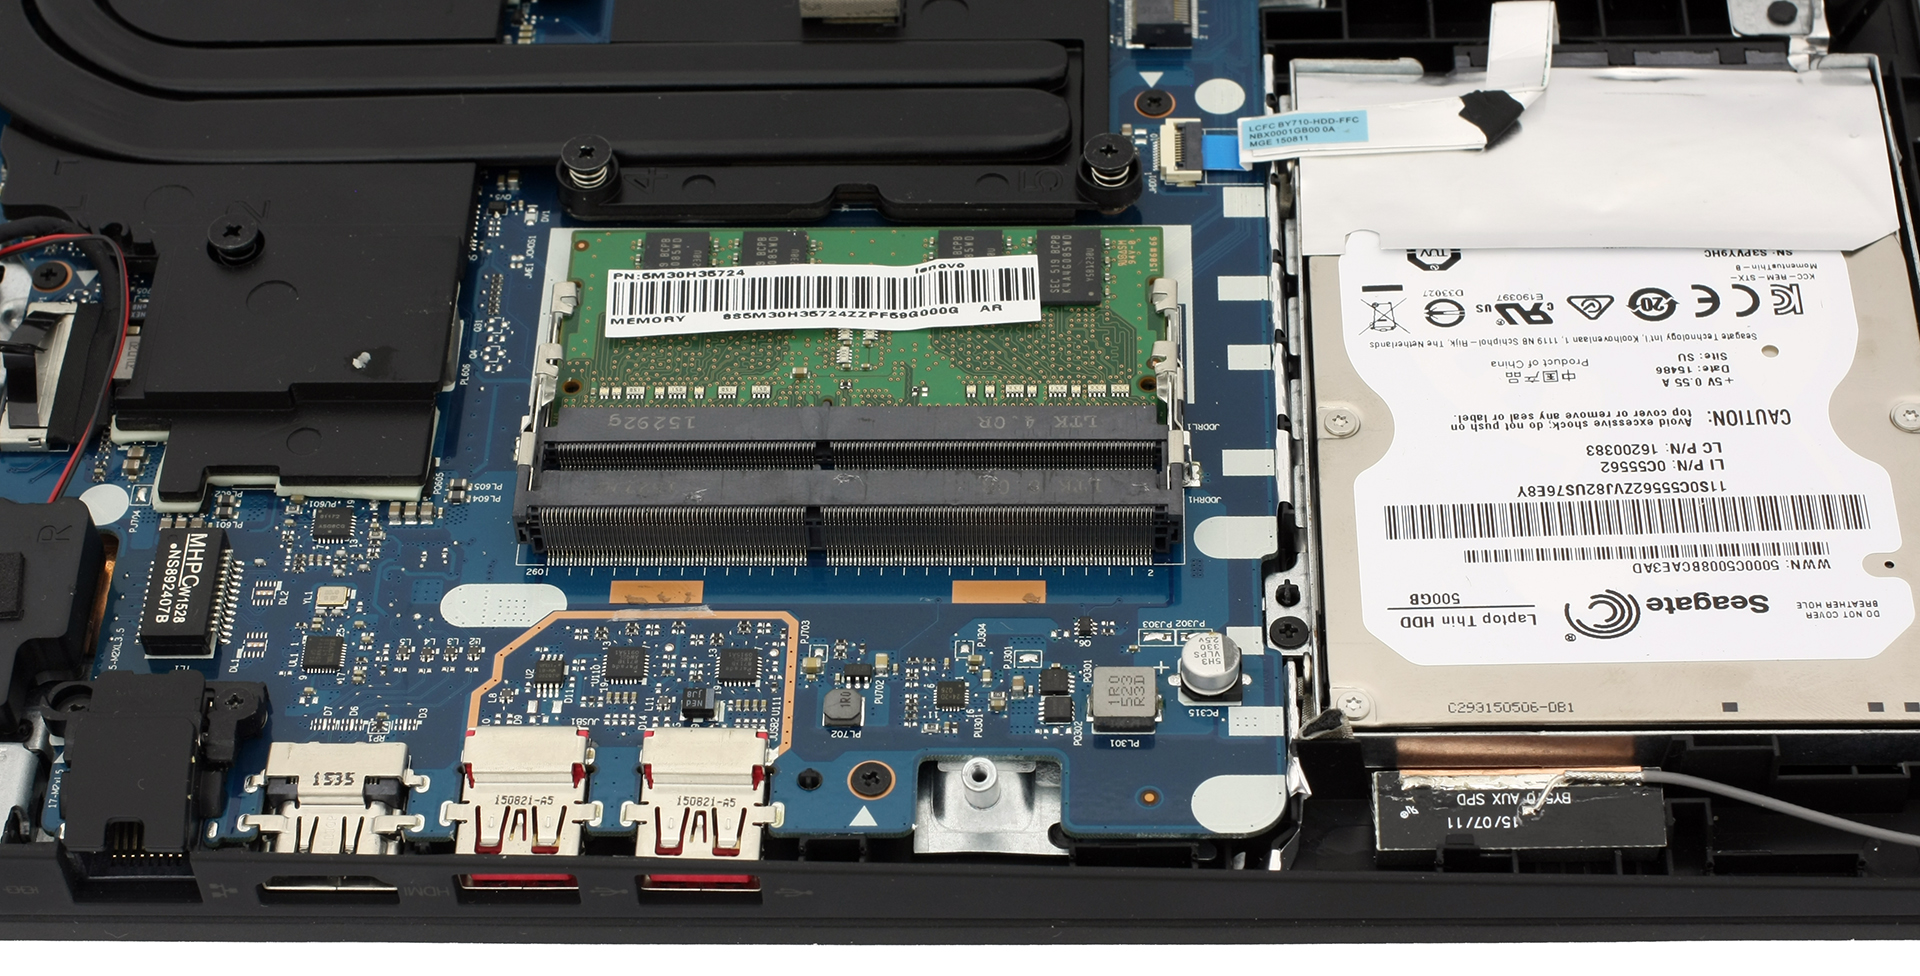 Inside Lenovo (15") disassembly, internal photos and upgrade options | LaptopMedia.com